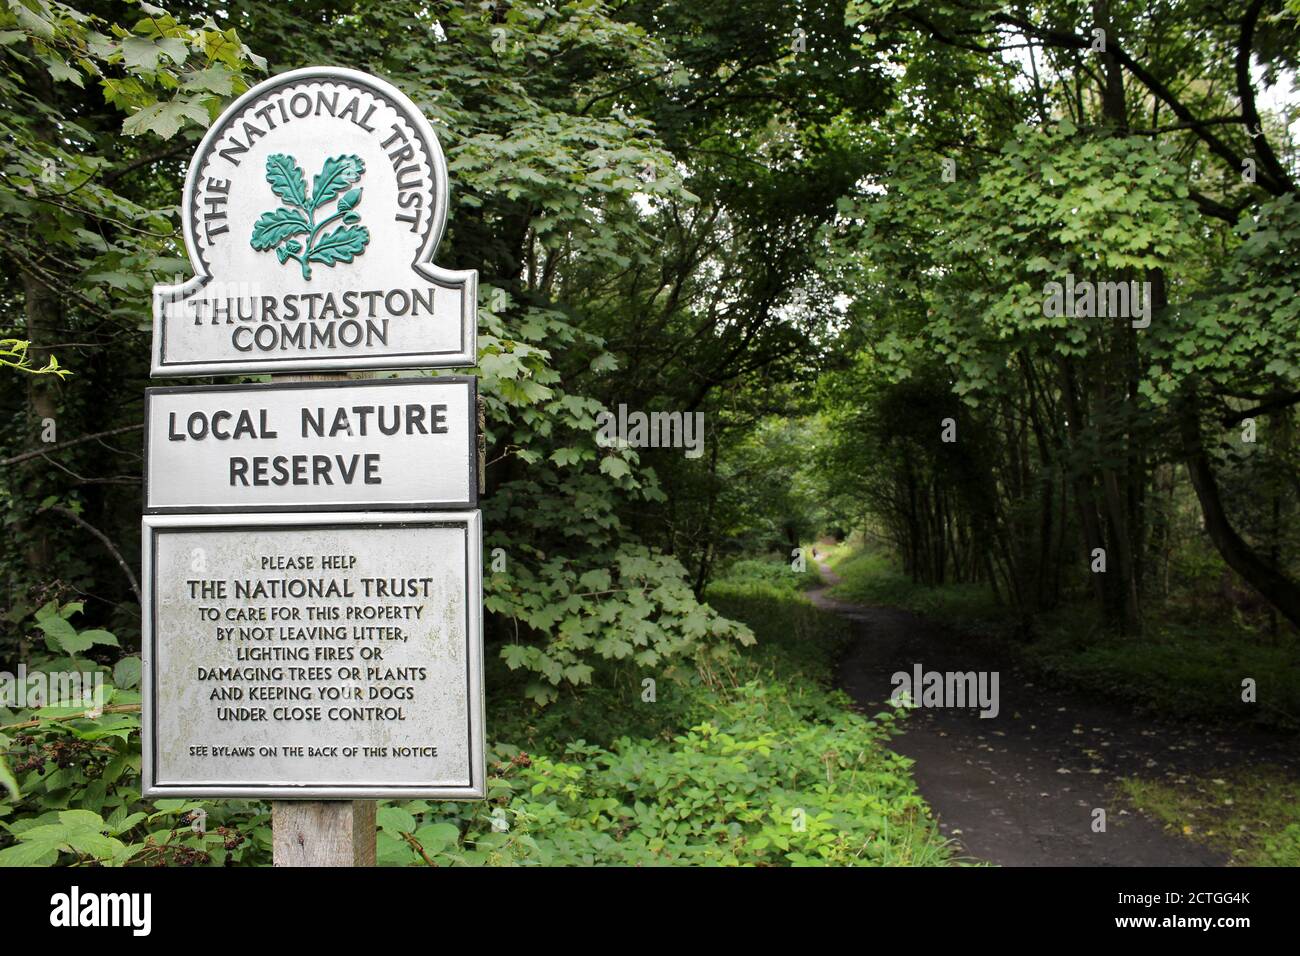 The National Trust - Thurstaston Common Nature Reserve, Wirral, Reino Unido Foto de stock